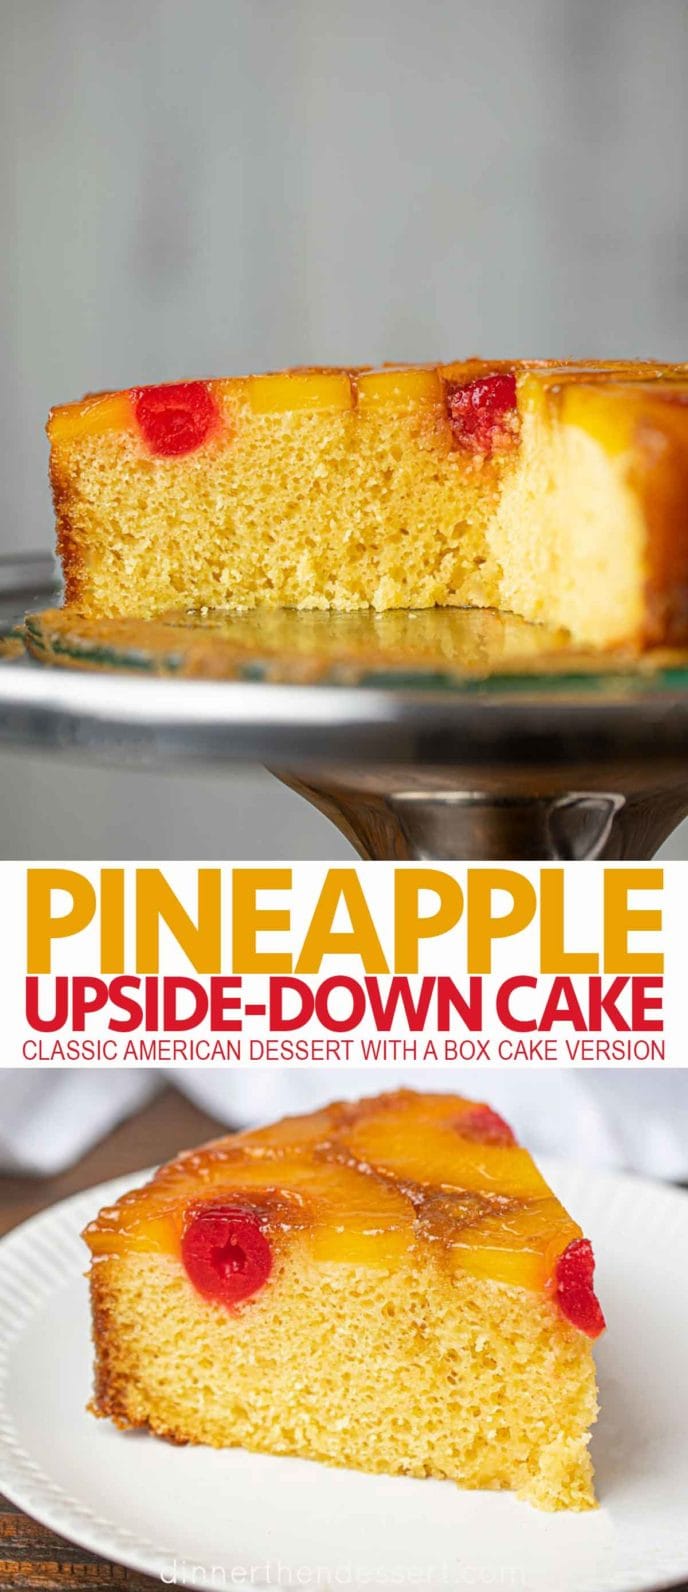 Cut Pineapple-Upside Down Cake